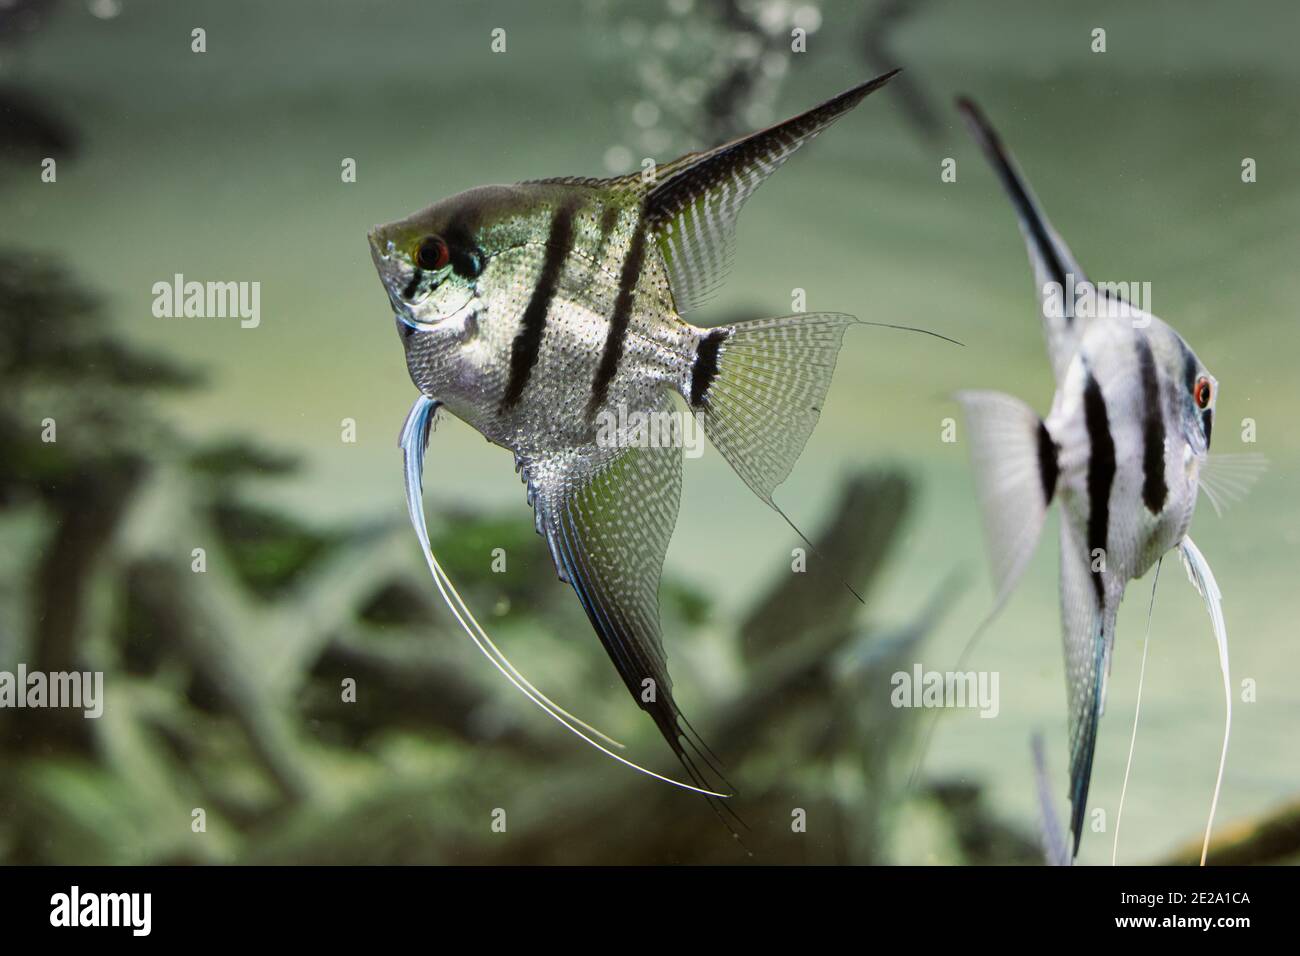 Two zebra Angelfish or Pterophyllum scalare in aquarium with blurred background Stock Photo